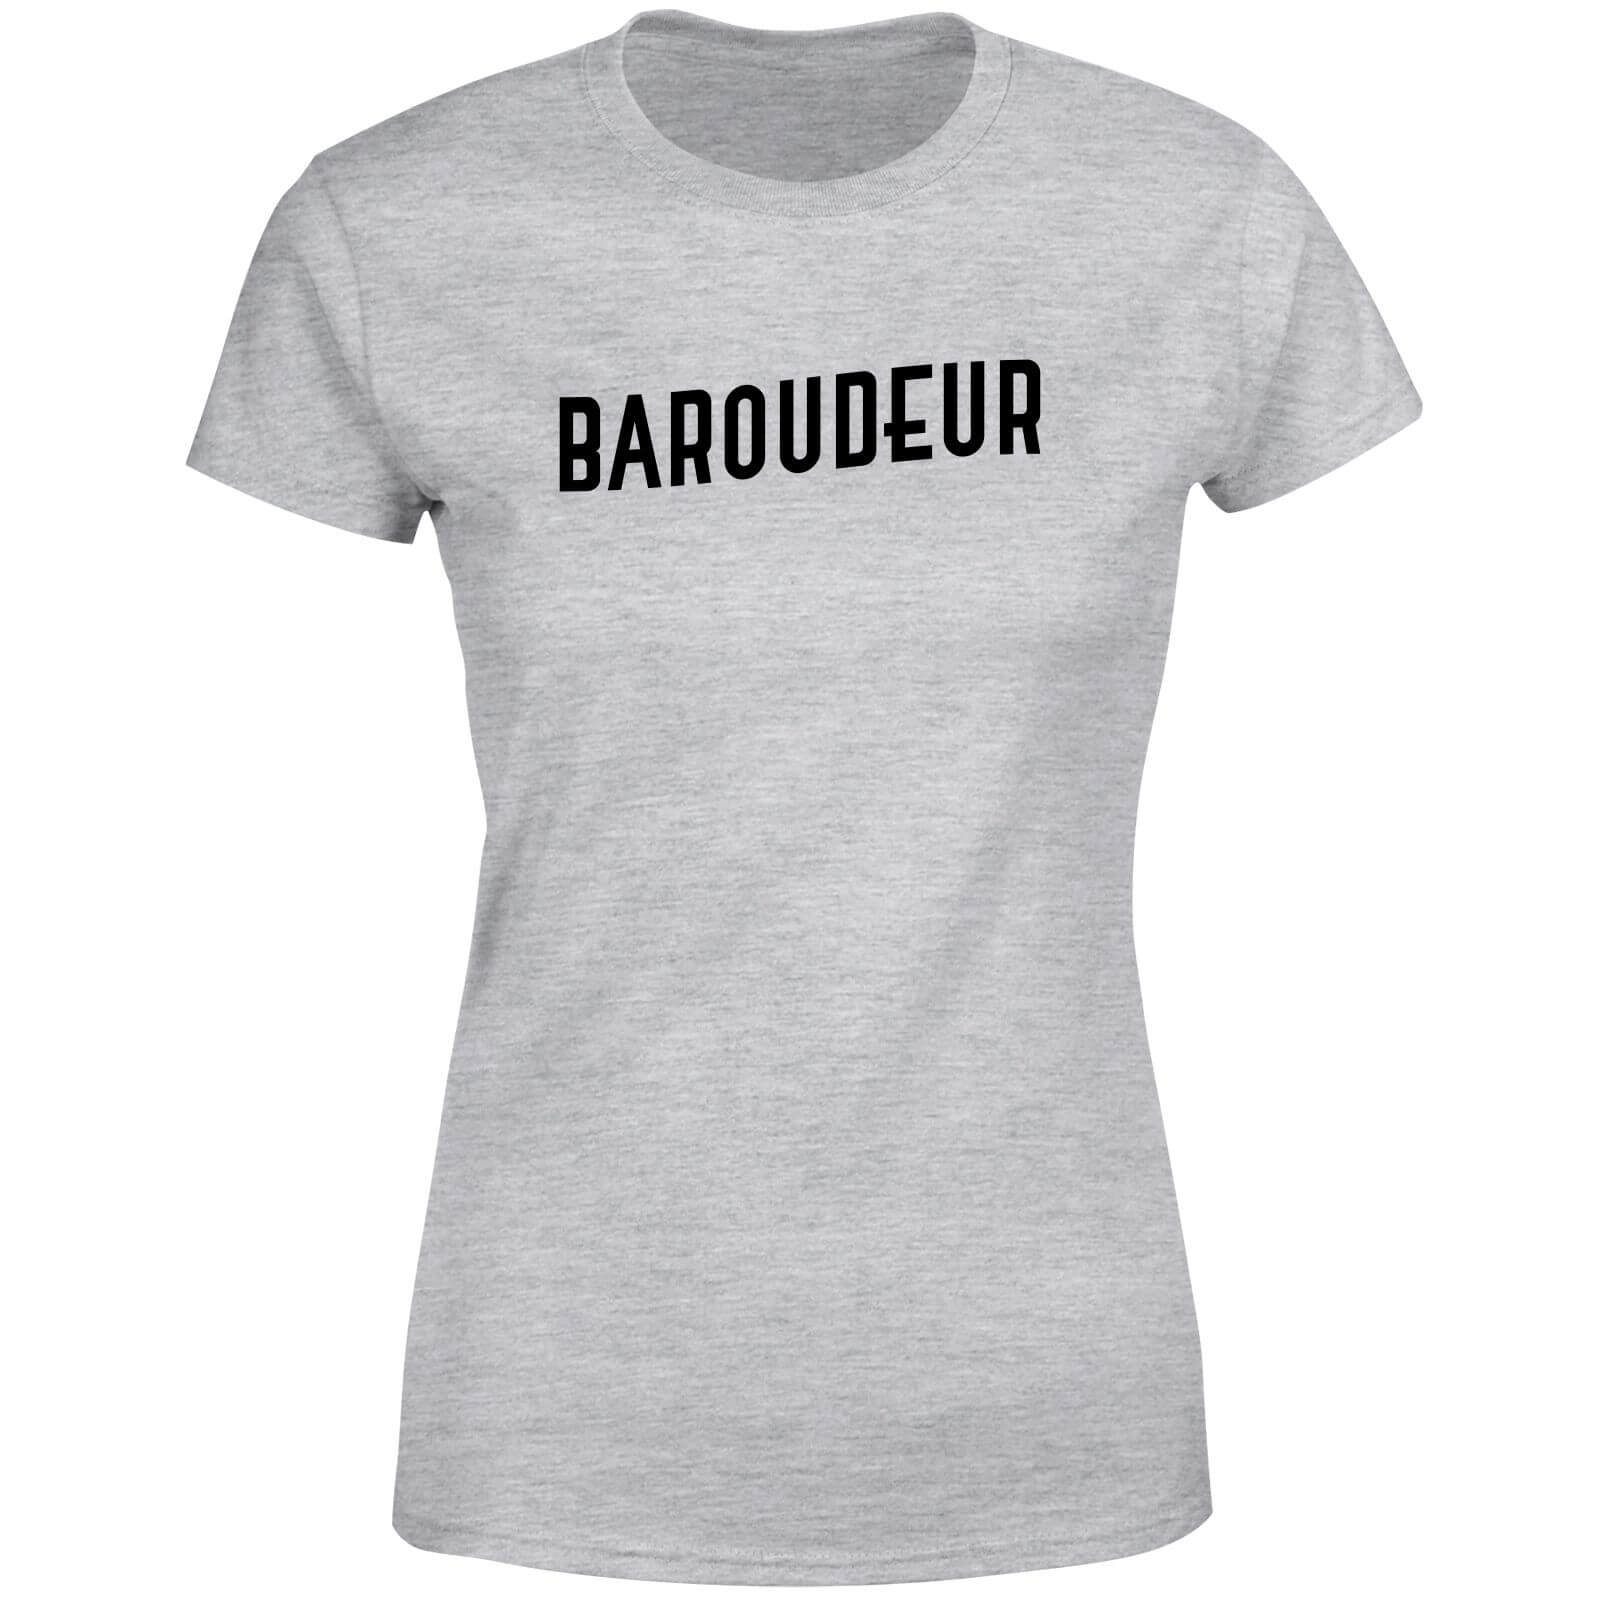 Baroudeur Women's T-Shirt - Grey - M - Grey